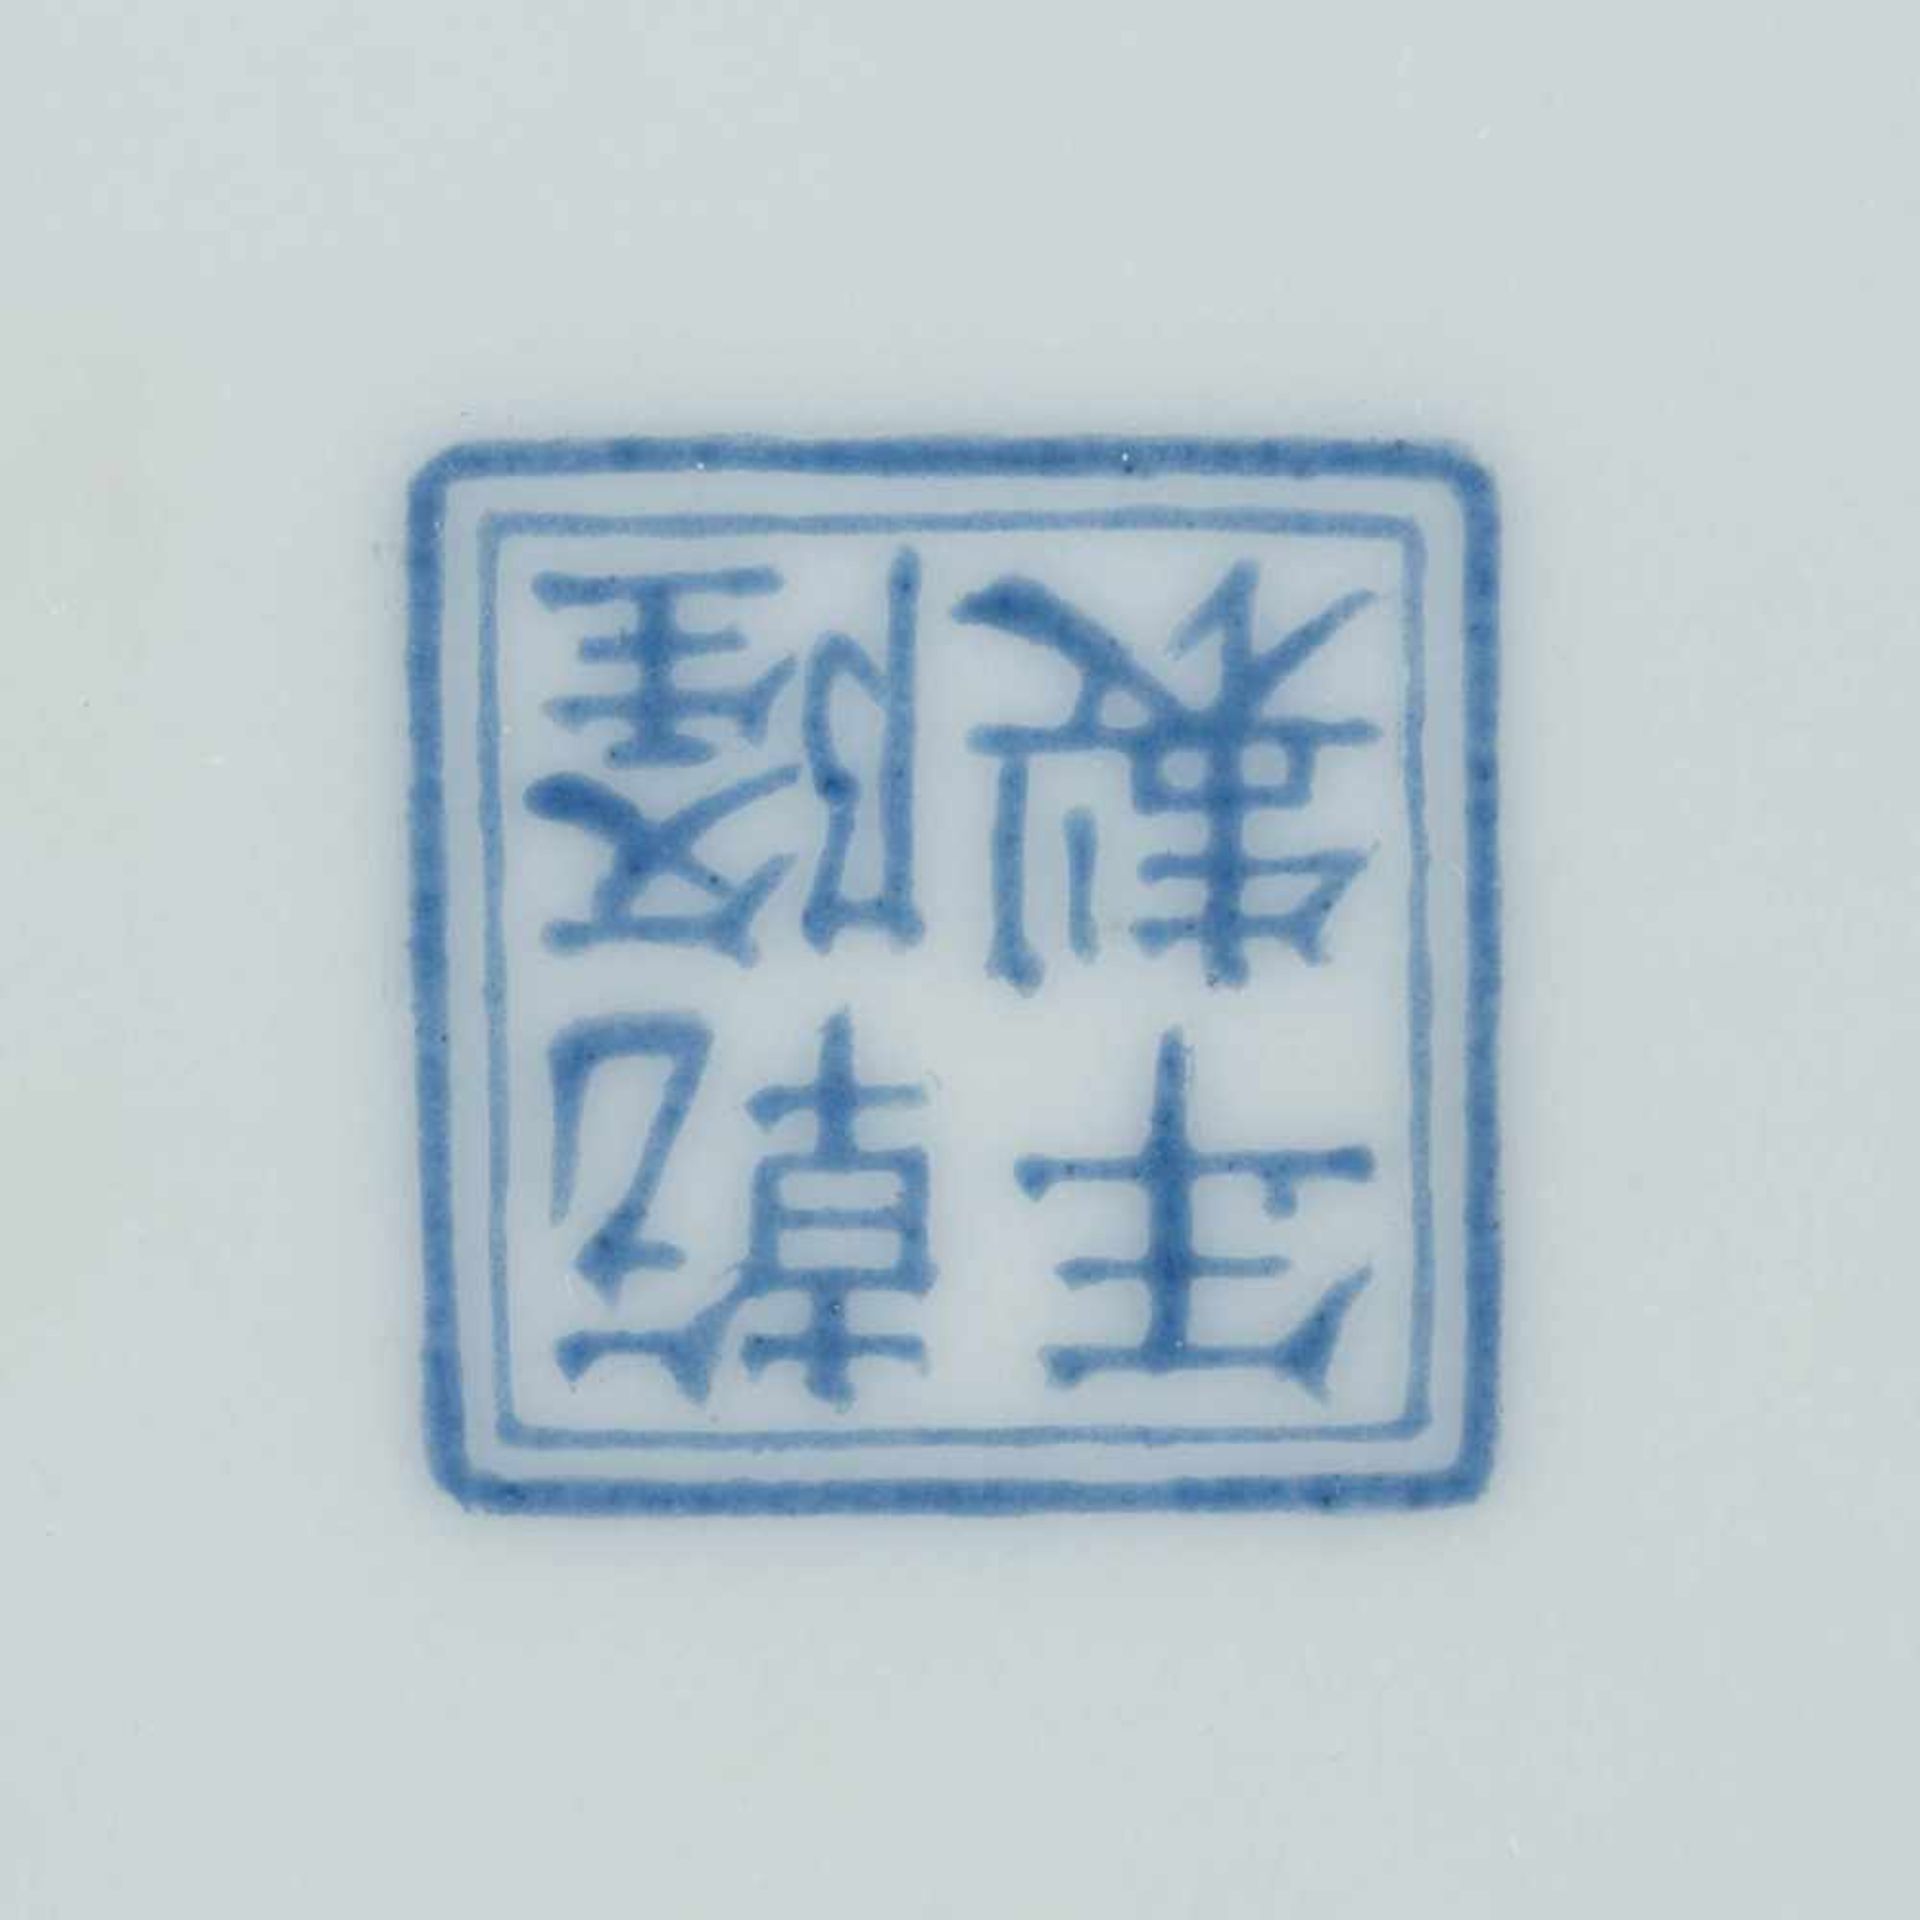 HUNDERT-KNABEN-VASE China, 20. Jh. Porzellan, polychrome Aufglasurbemalung. H. 32,4 cm. Im Boden - Bild 3 aus 3